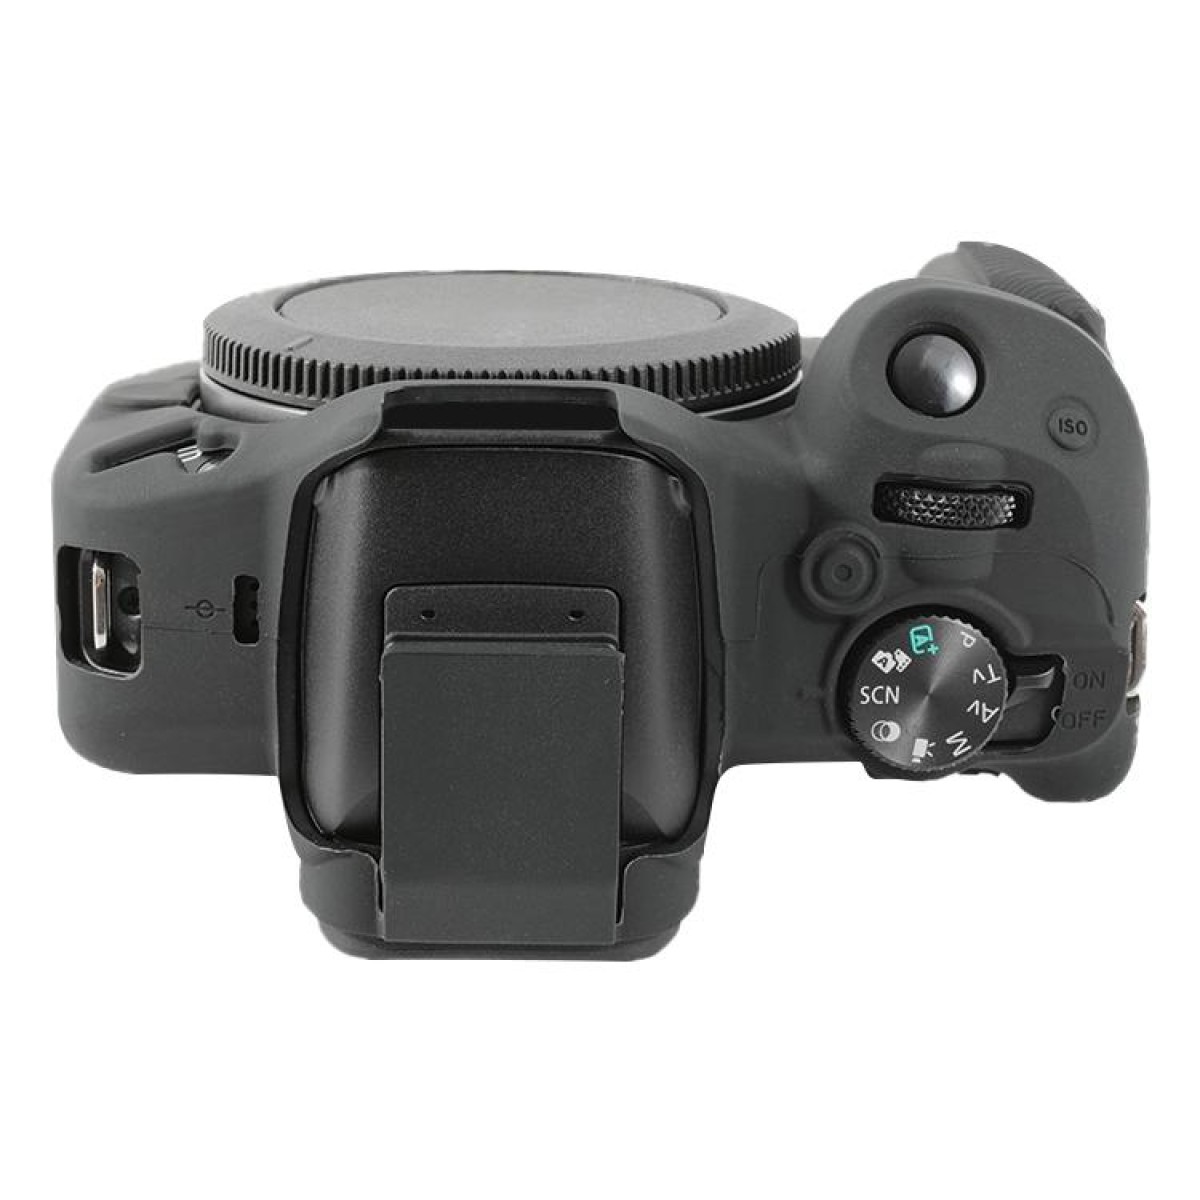 For Canon EOS R50 Soft Silicone Protective Case(Black)